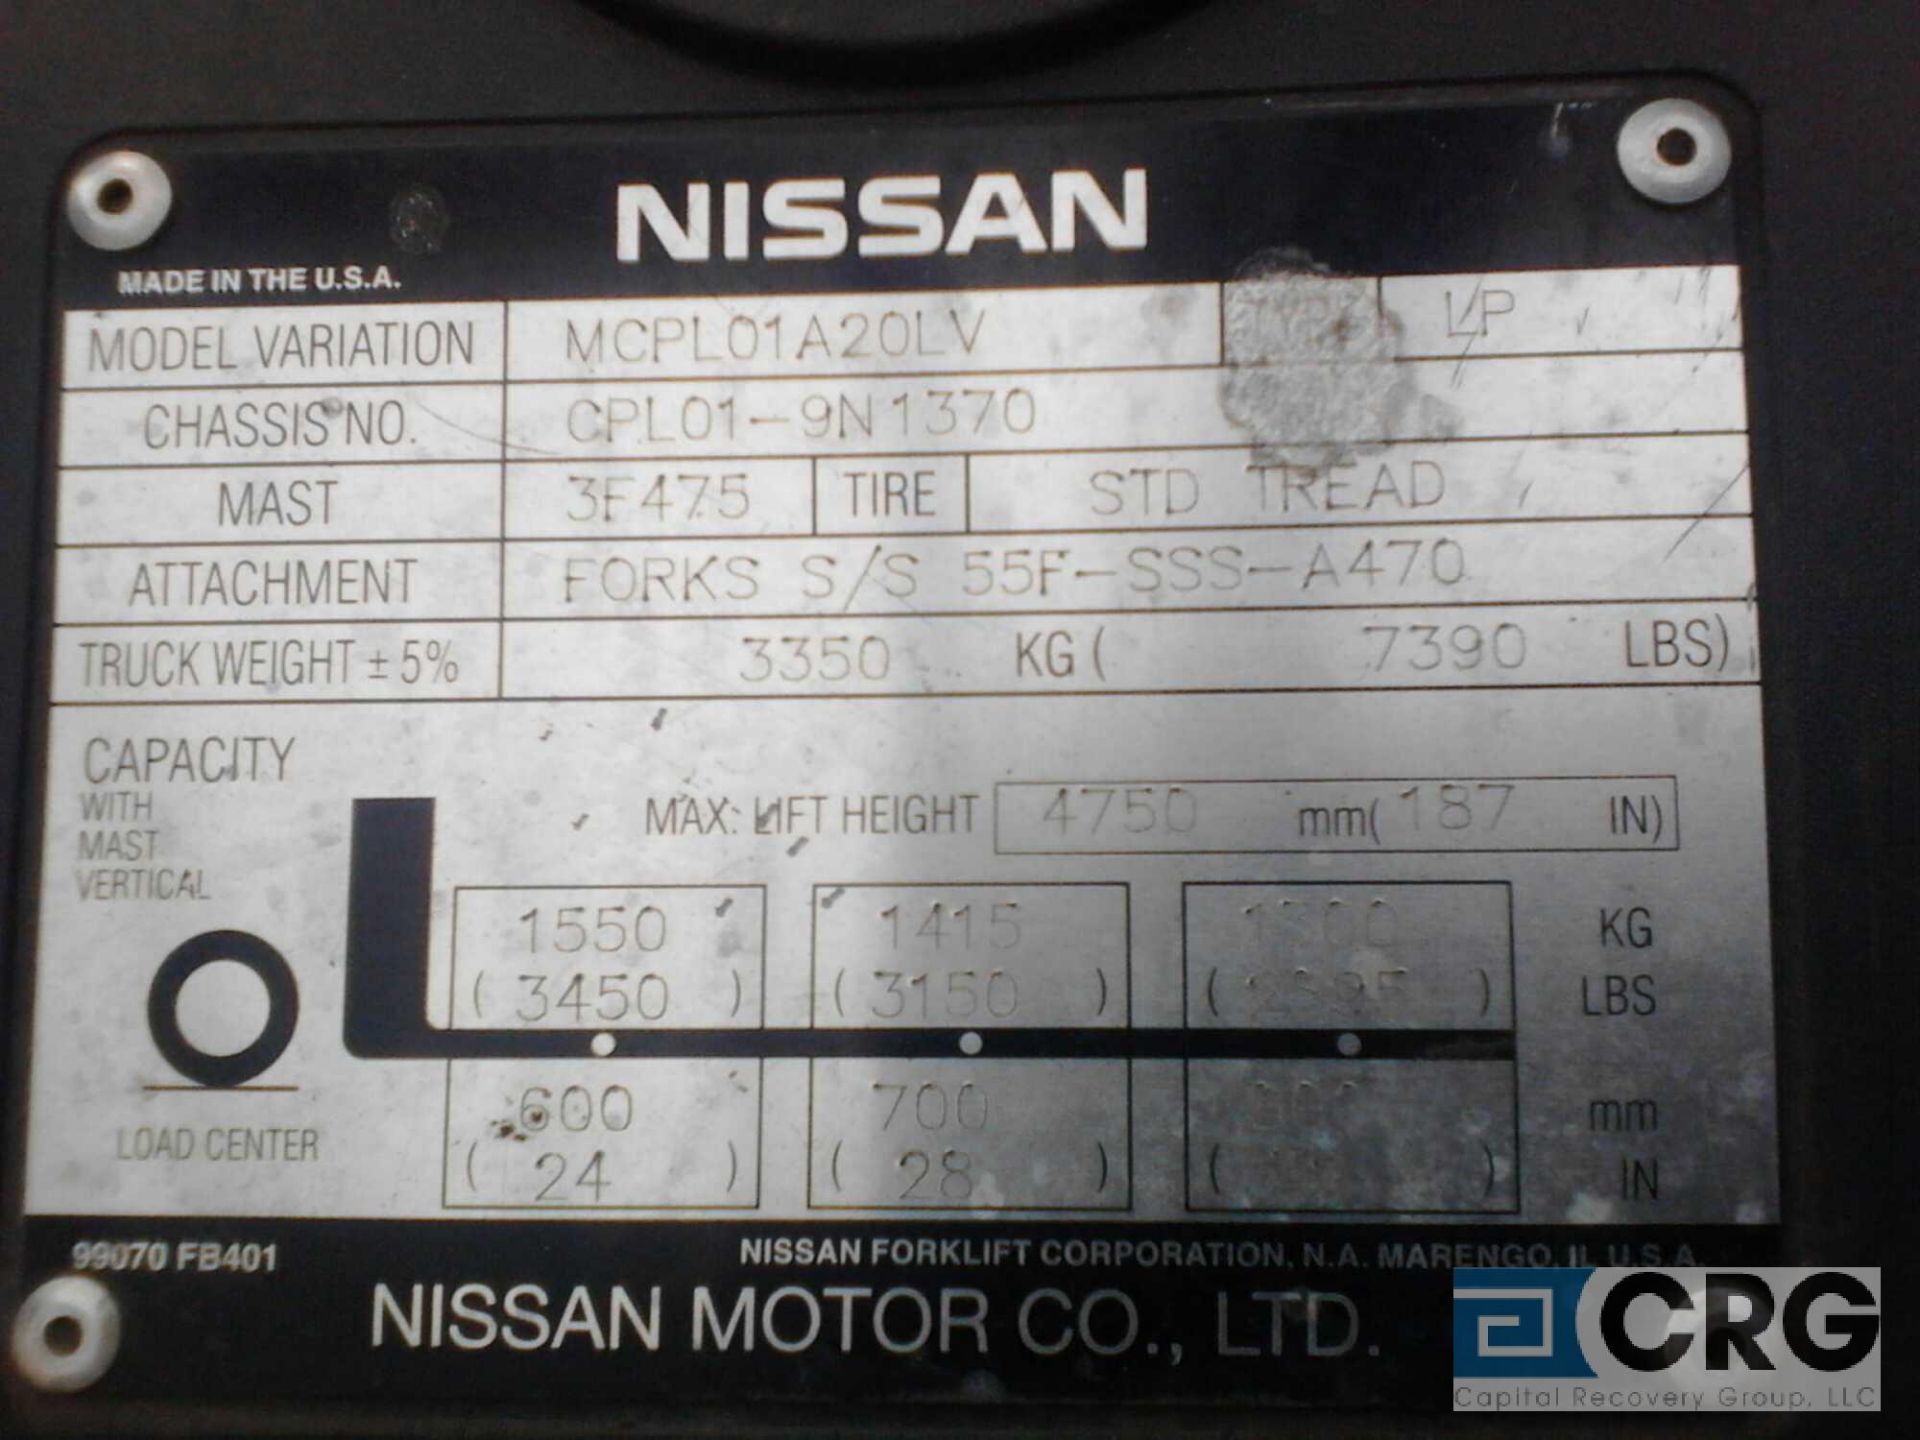 2005 Nissan 40, 4500 lb LPG Forklift, m/n MCPL01A20LV, s/n CPL01-9N1370, 3 Stage mast, 189" lift, - Image 3 of 3